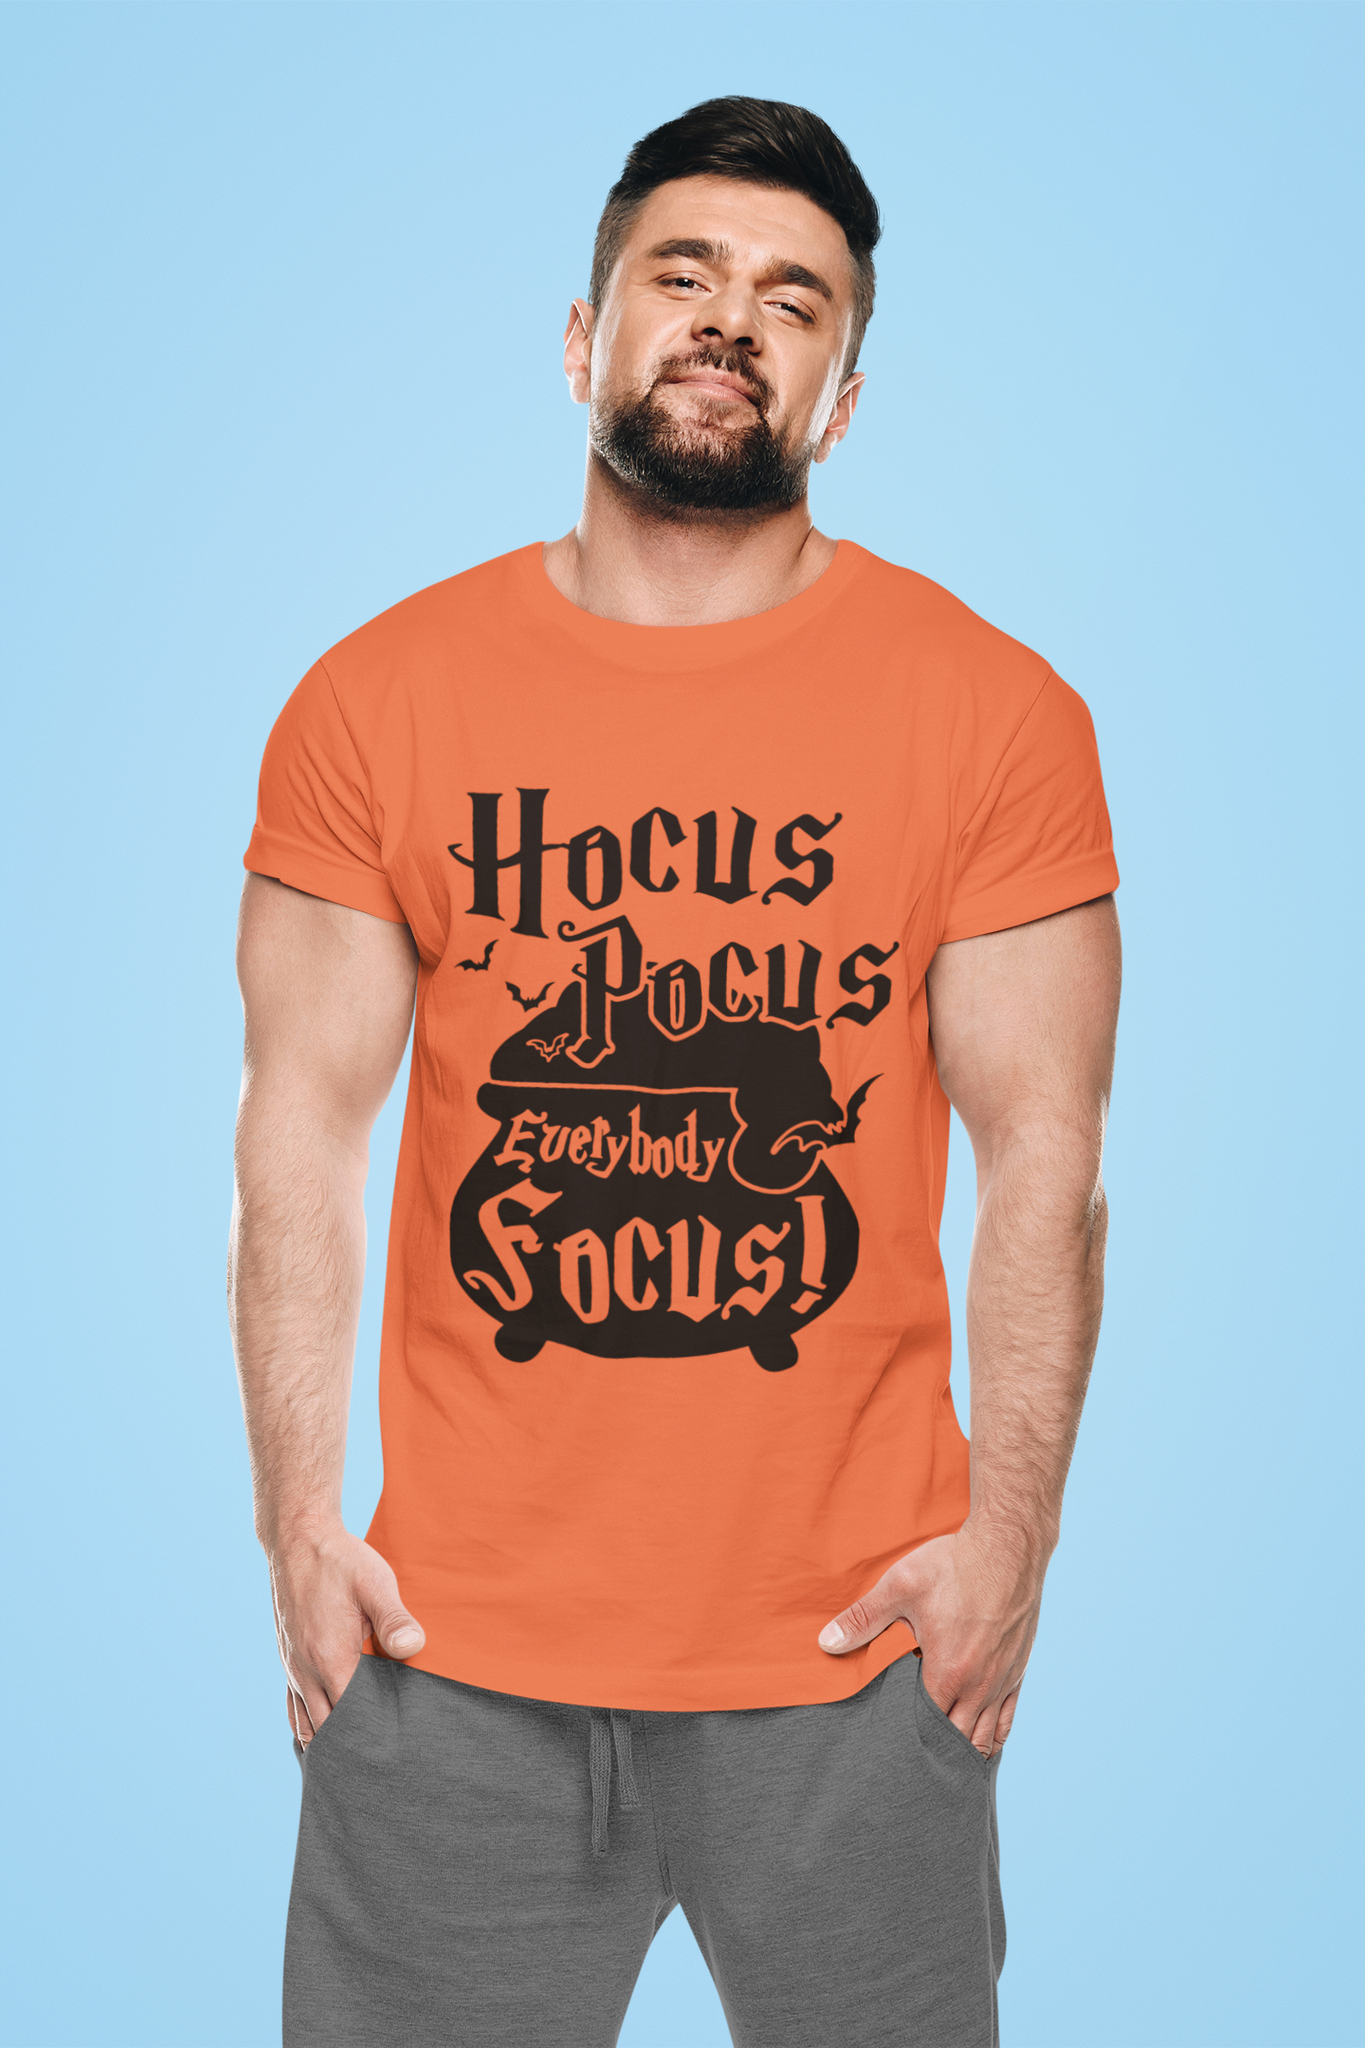 Hocus Pocus T Shirt, Hocus Pocus Everybody Focus Tshirt, Halloween Gifts